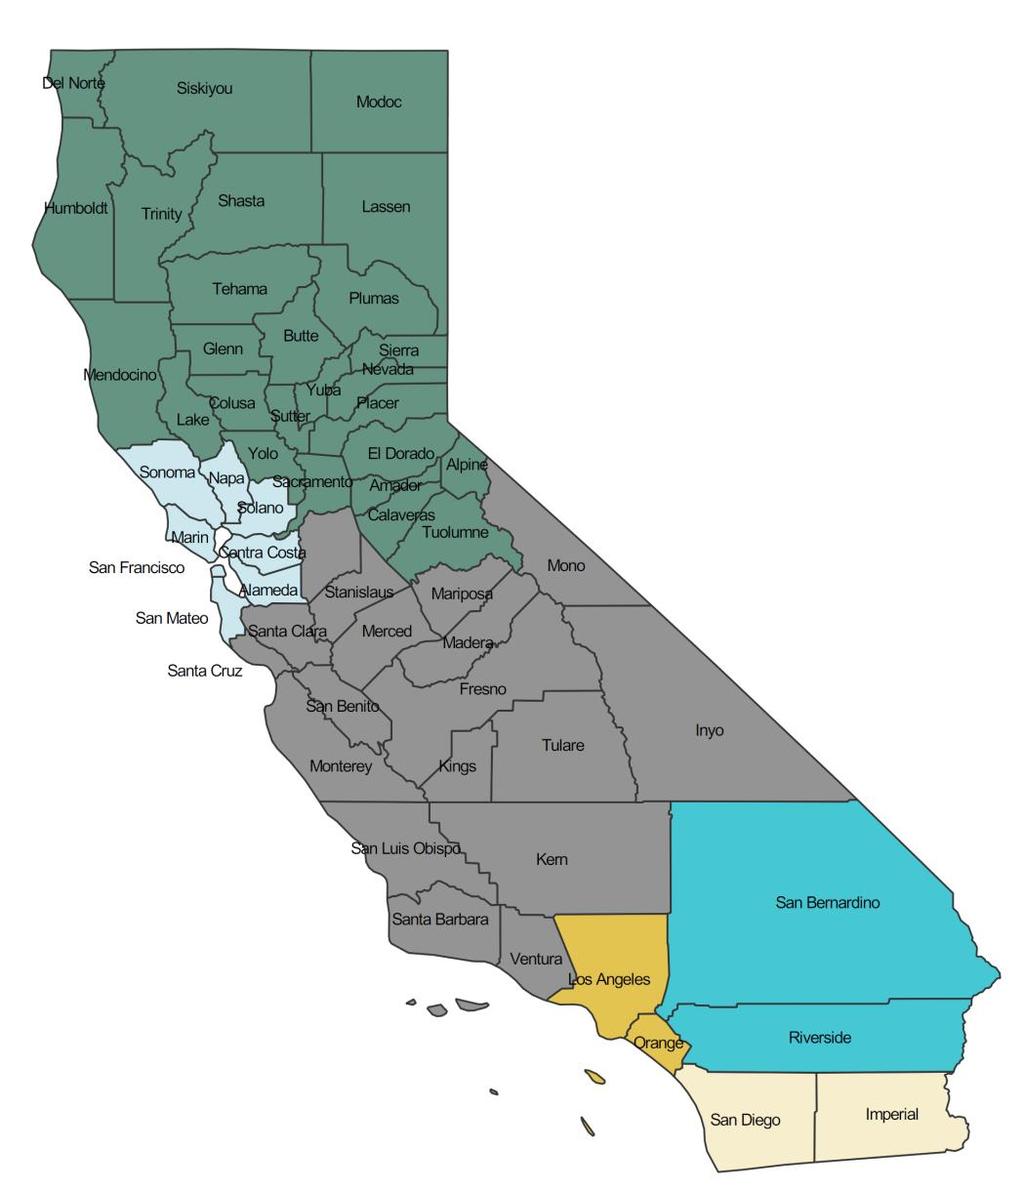 REGIONAL FUNDING POOL Covered California has established a Regional Funding Pool in the